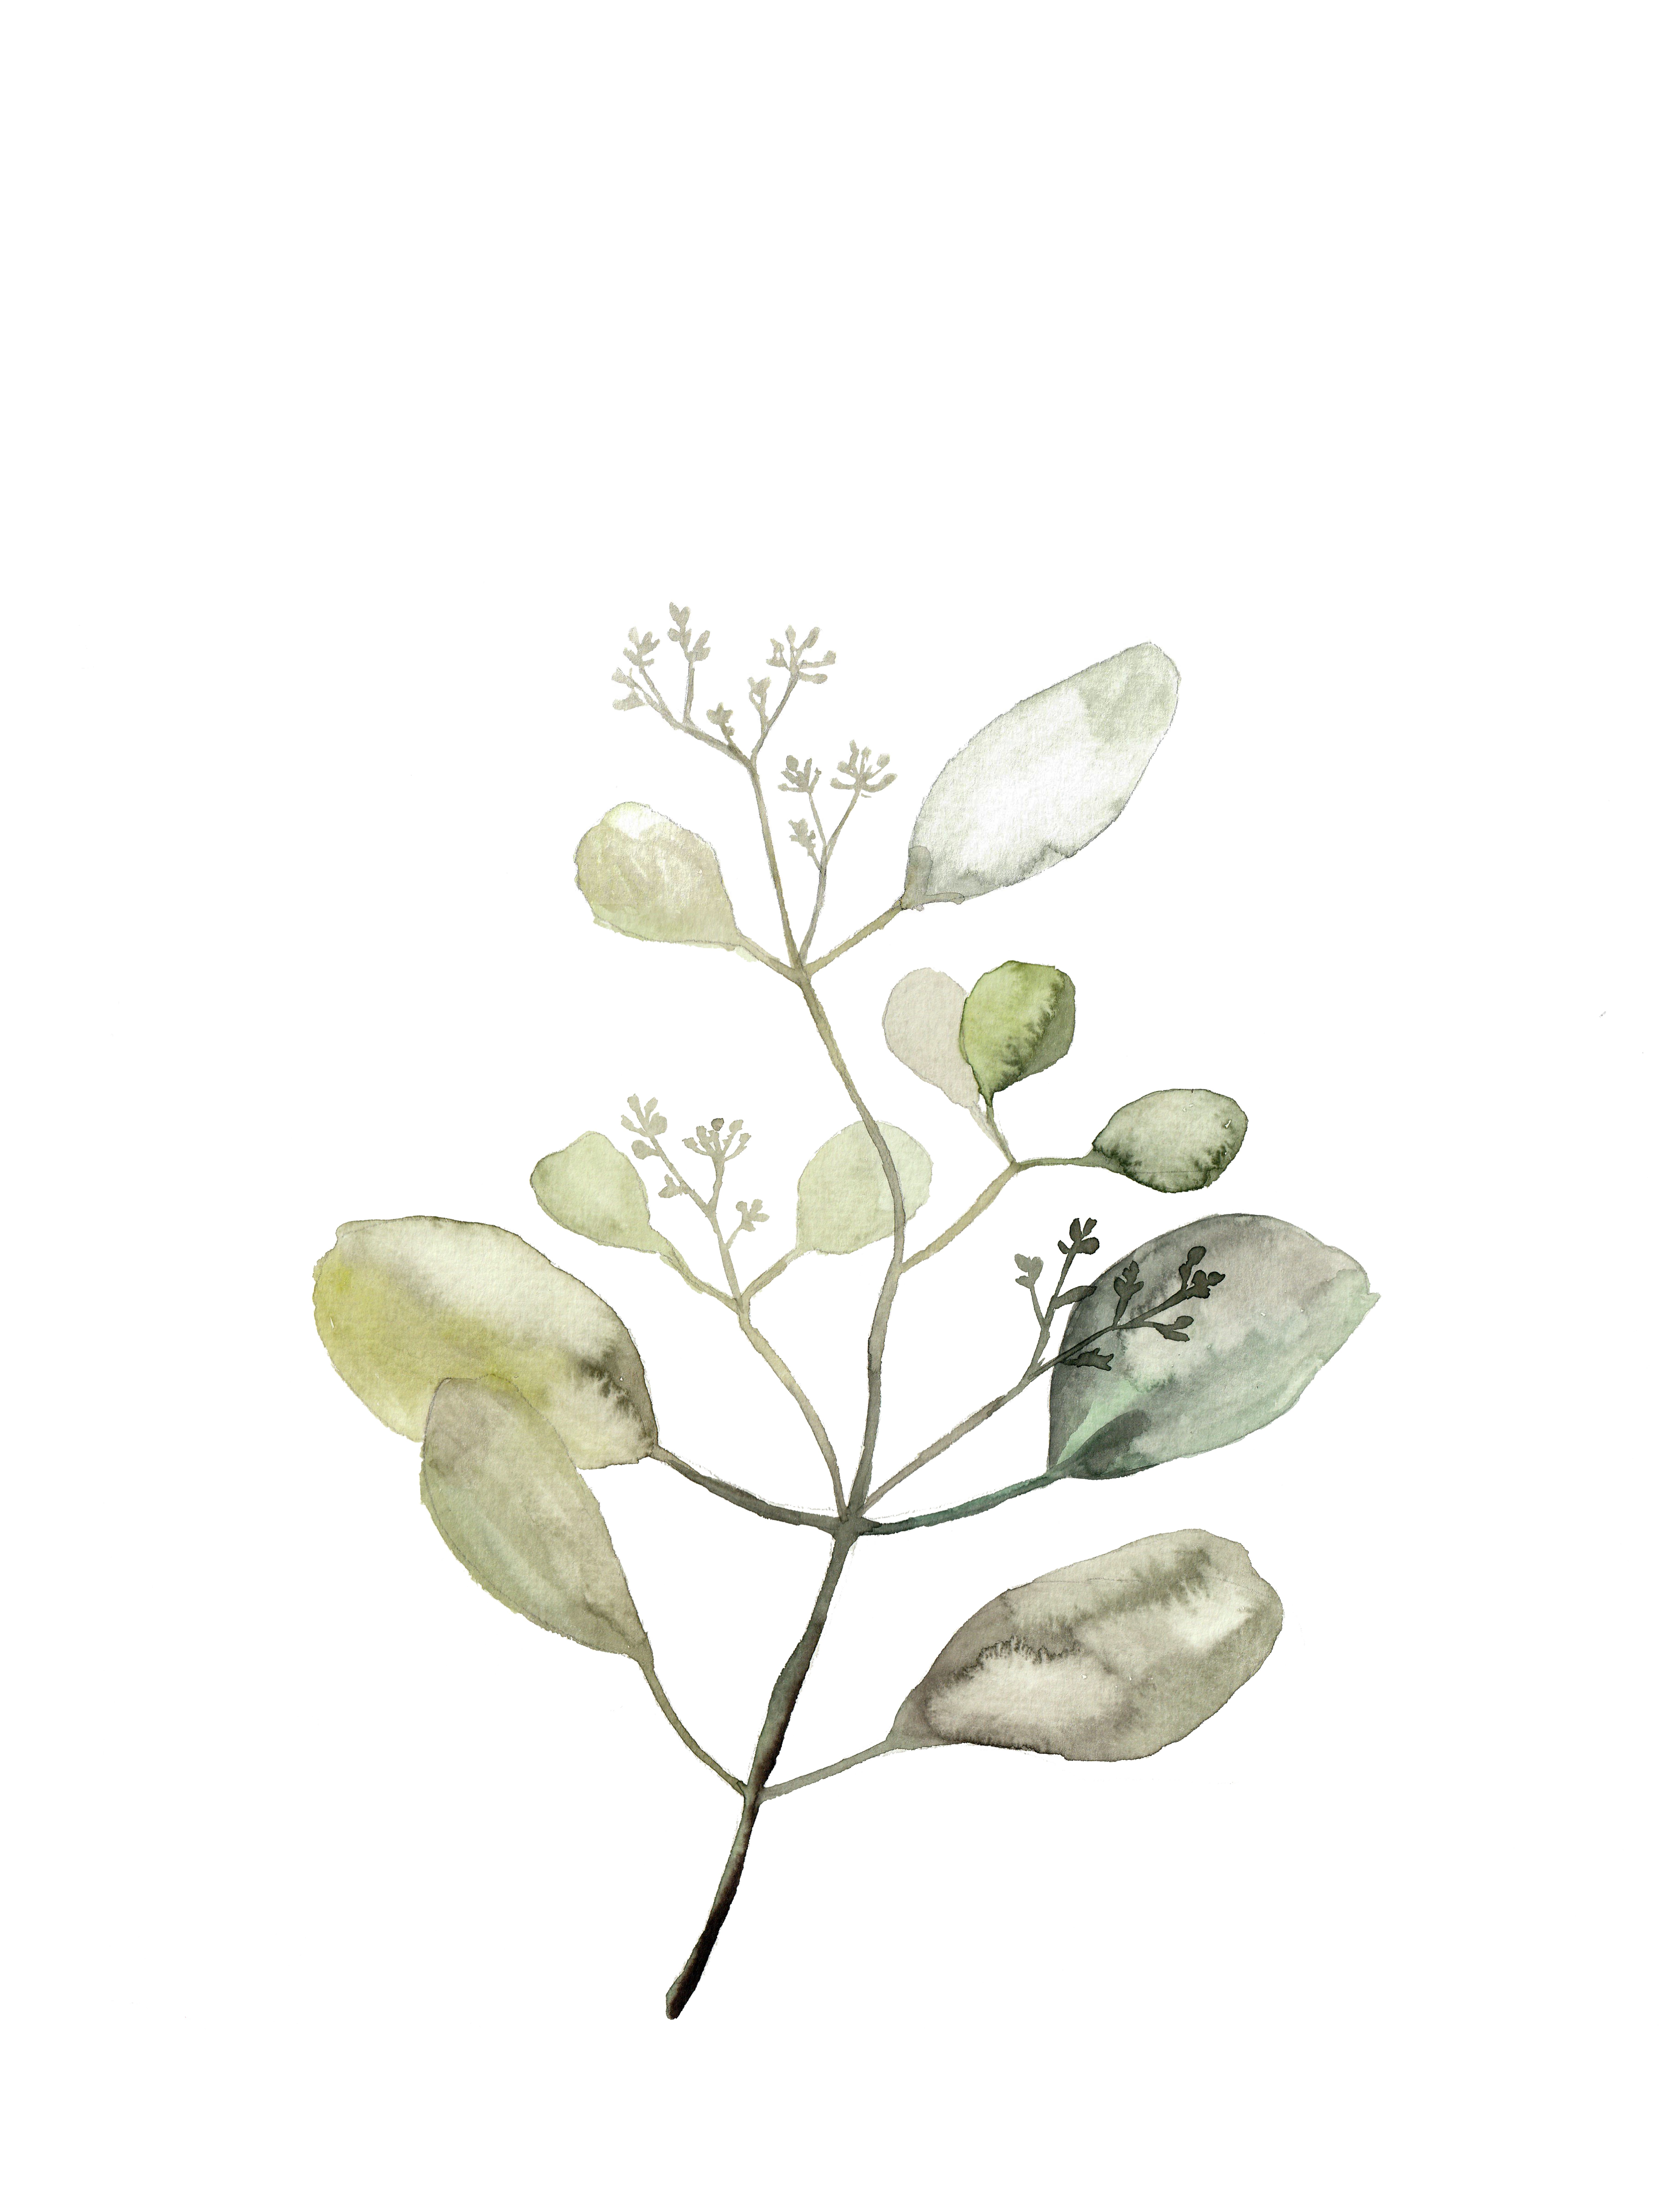 806-botanical-illustration---eucalyptus-3-16351891890454.jpg